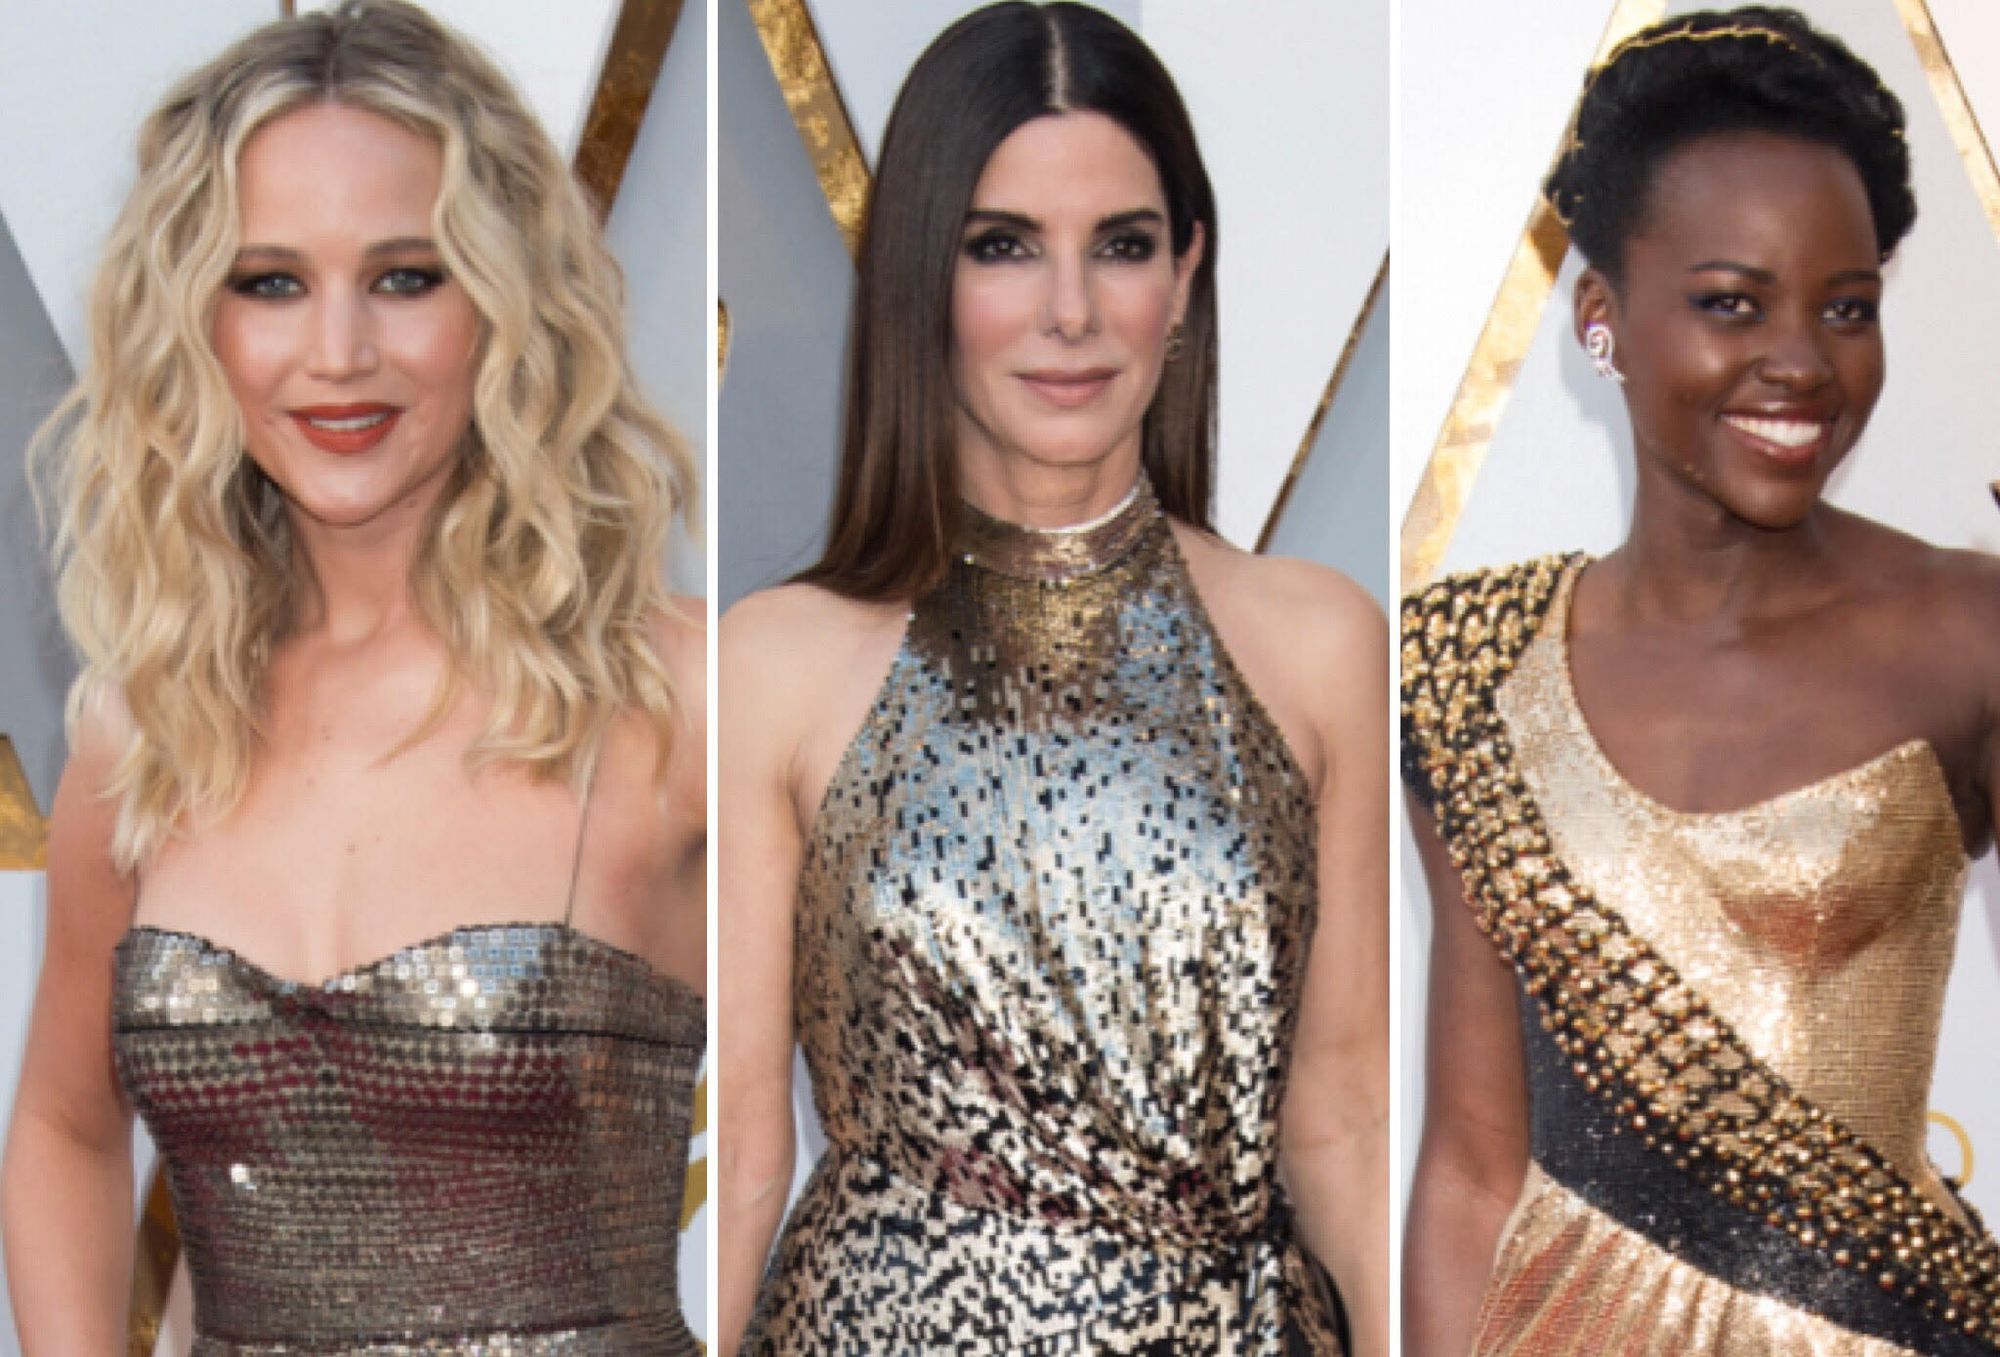 Metallic-Hued Dresses Dominated The Oscar 2018 Red Carpet